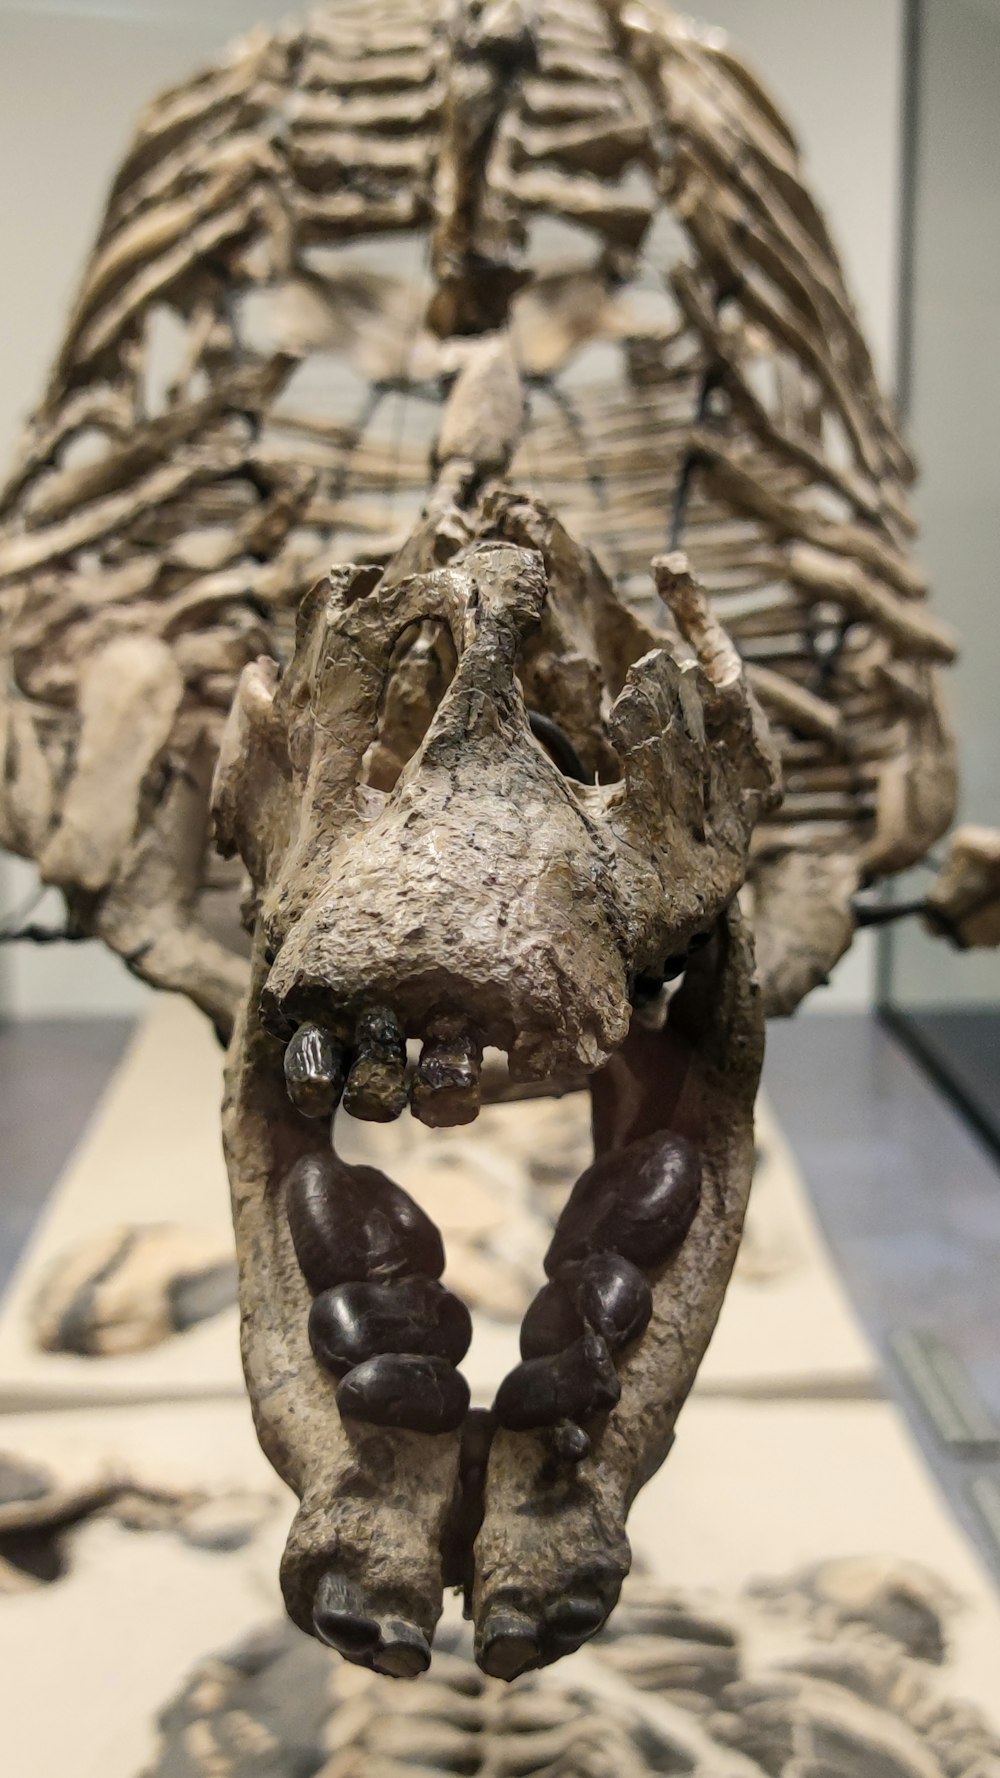 a skull of an animal